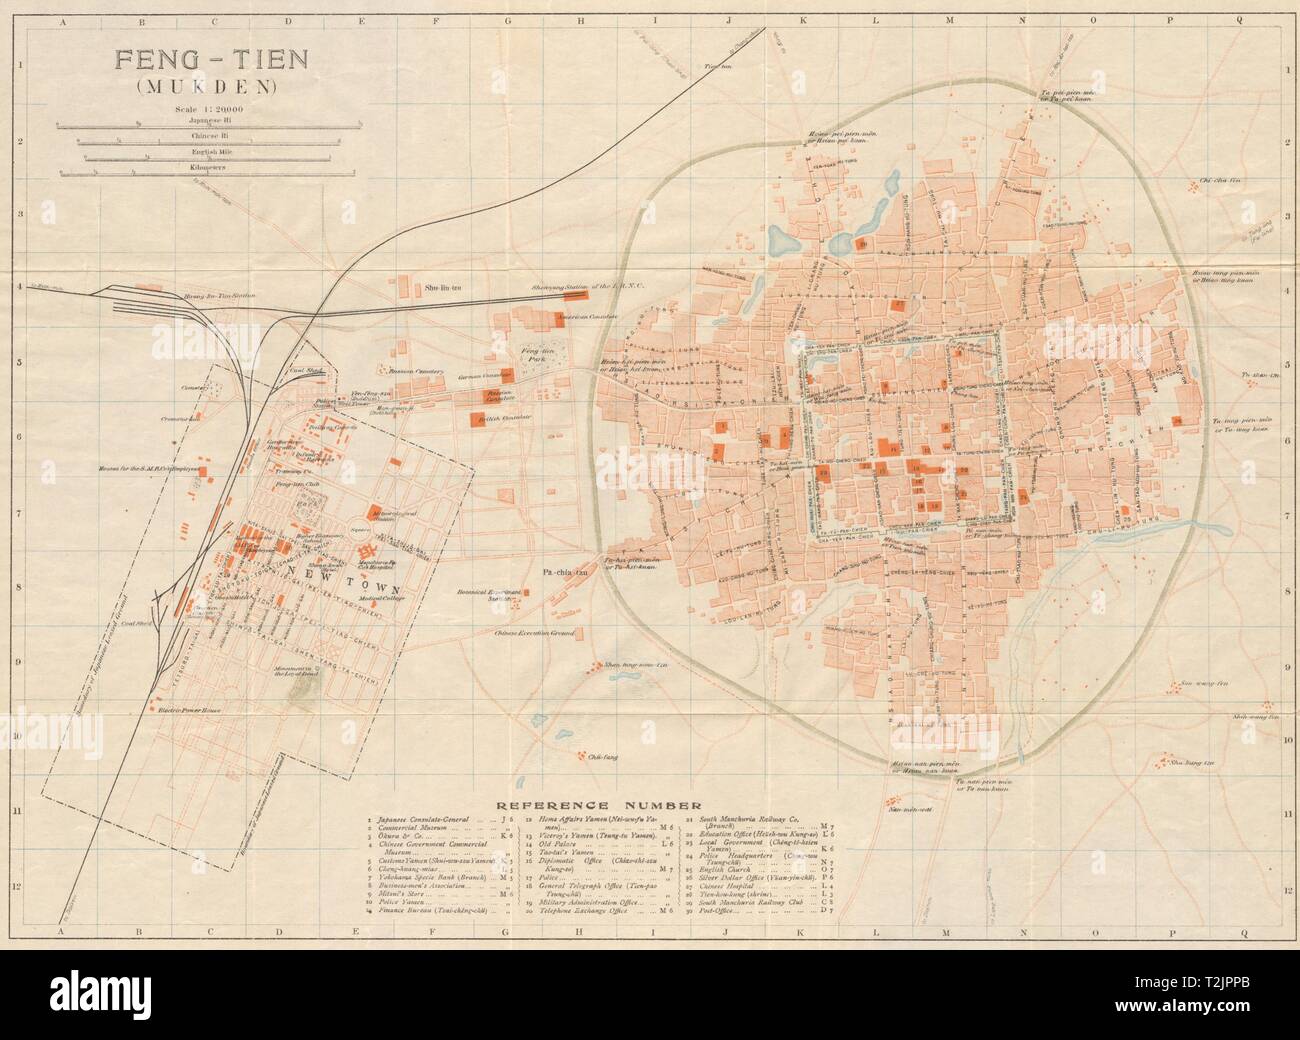 "Feng-tien (Mukden)". Shenyang antike Stadt Stadt zu planen. Liaoning, China 1913 Karte Stockfoto